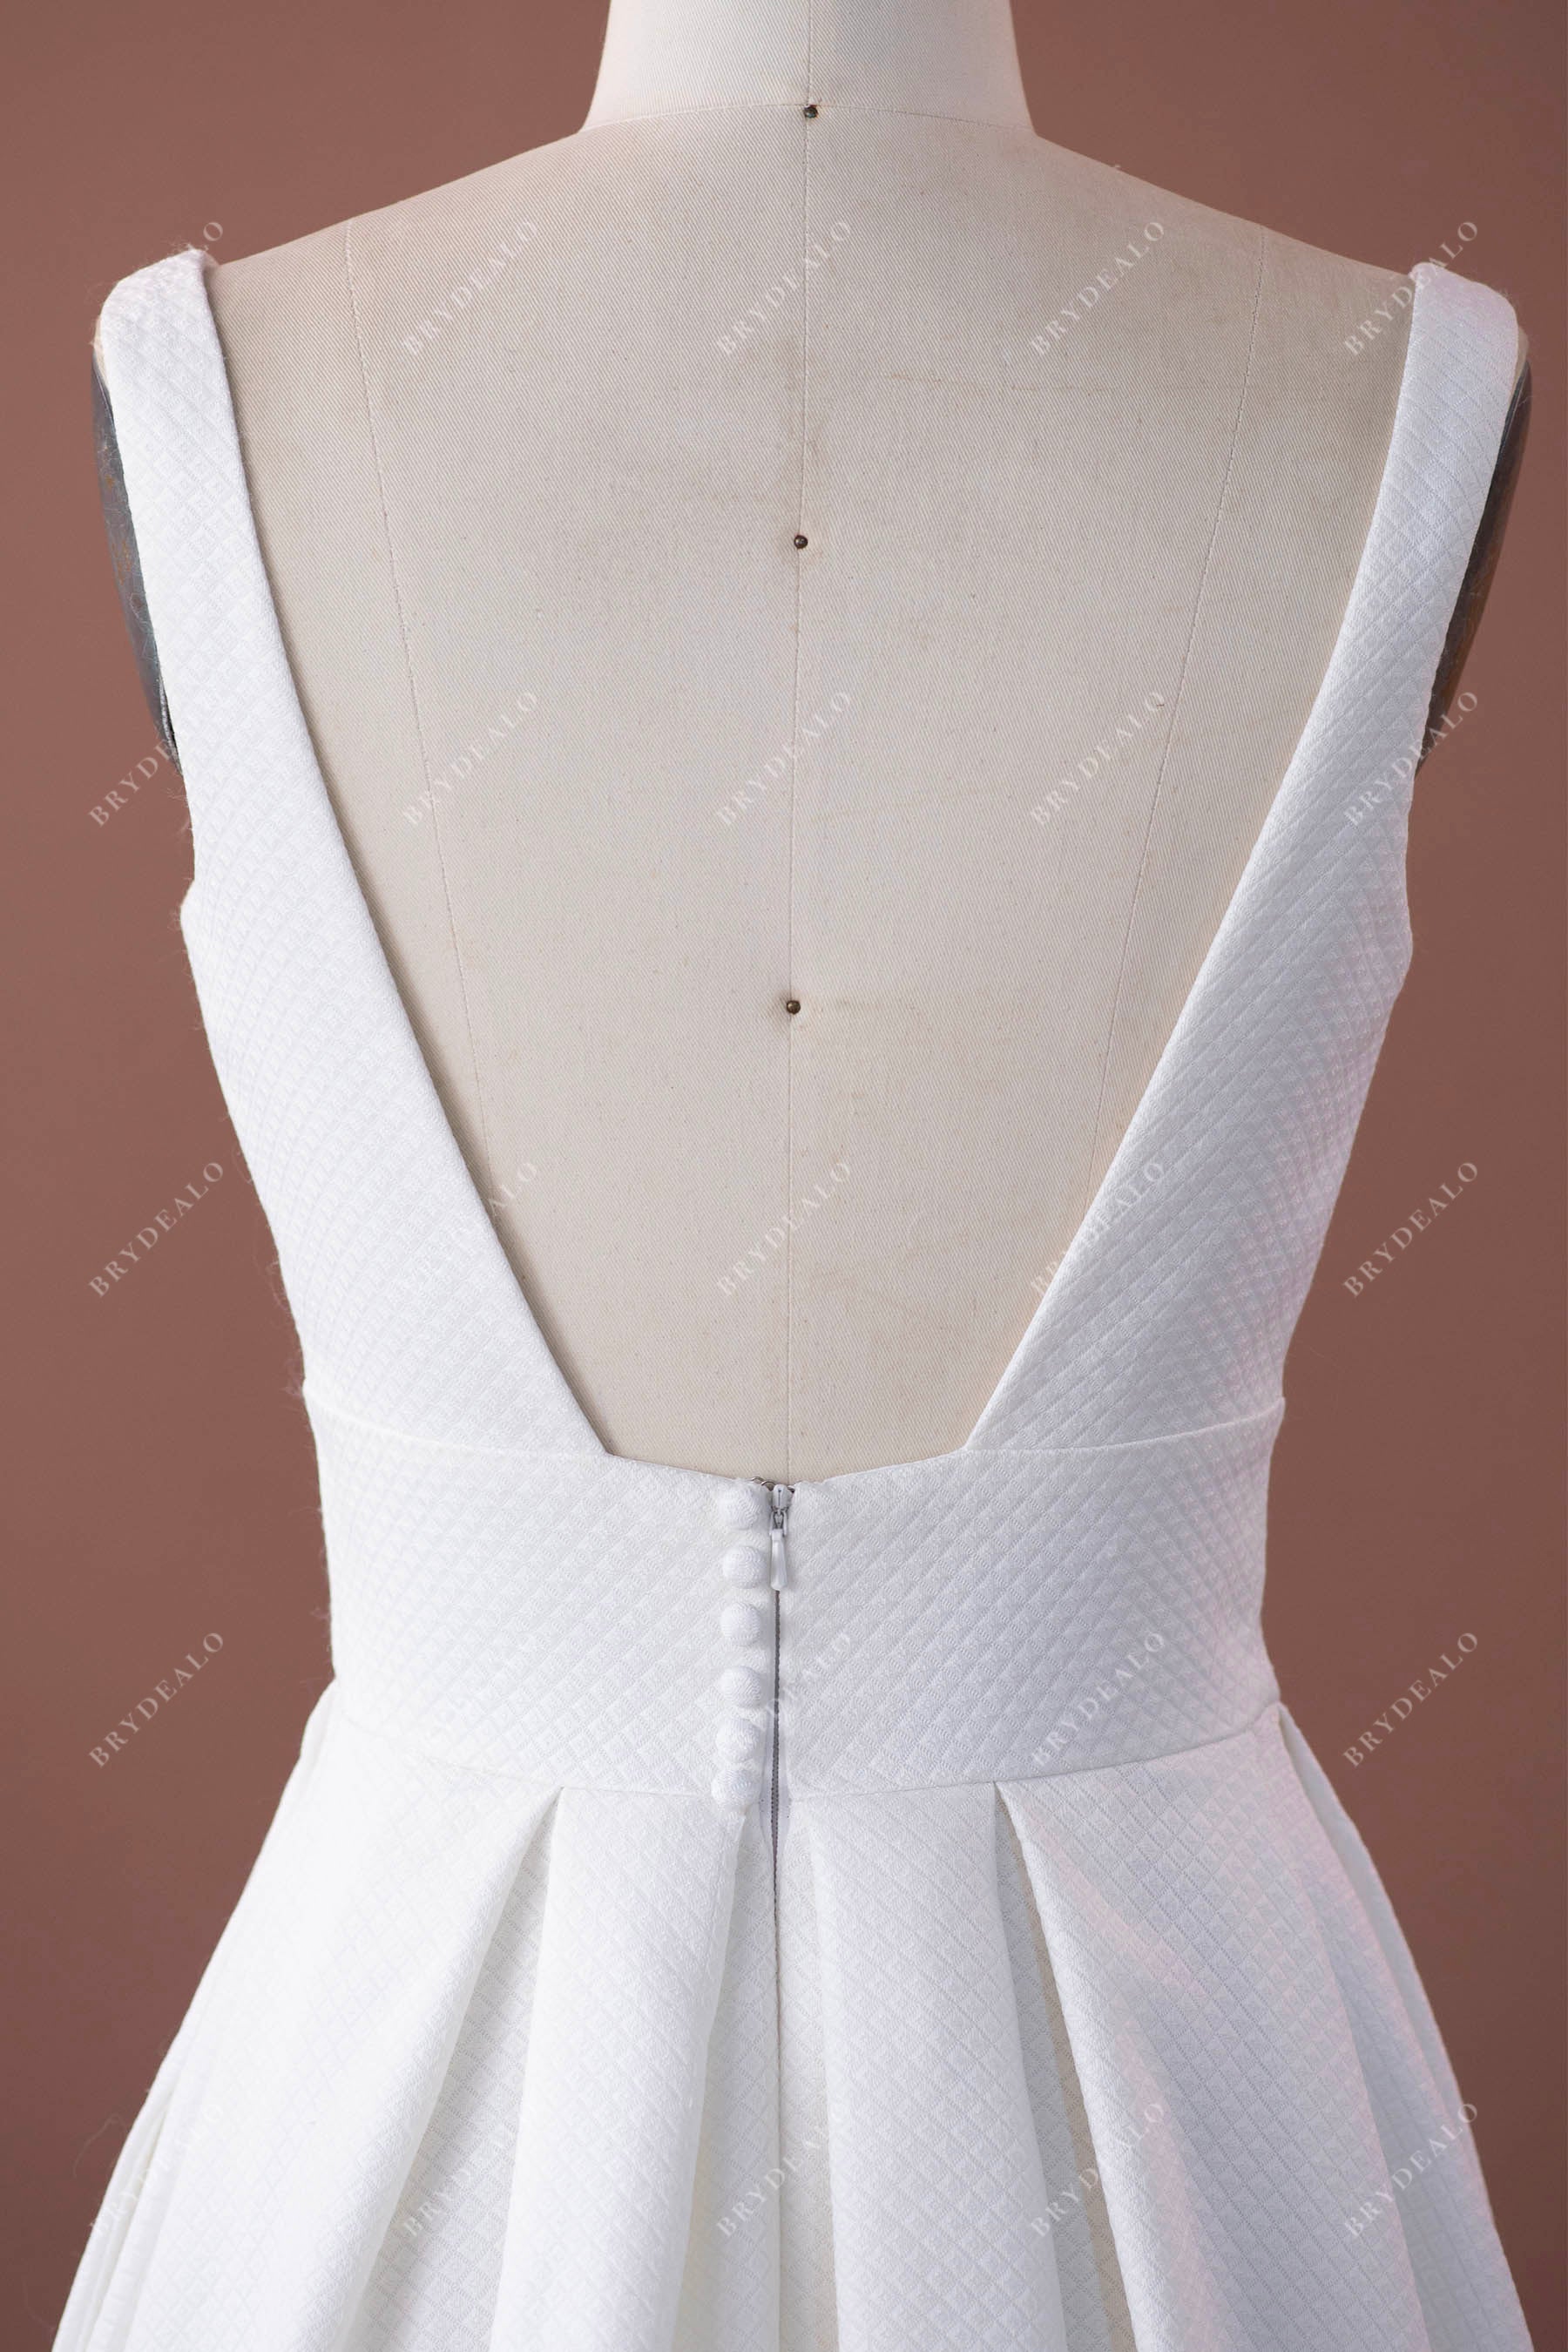 simple straps open button back A-line wedding dress sample